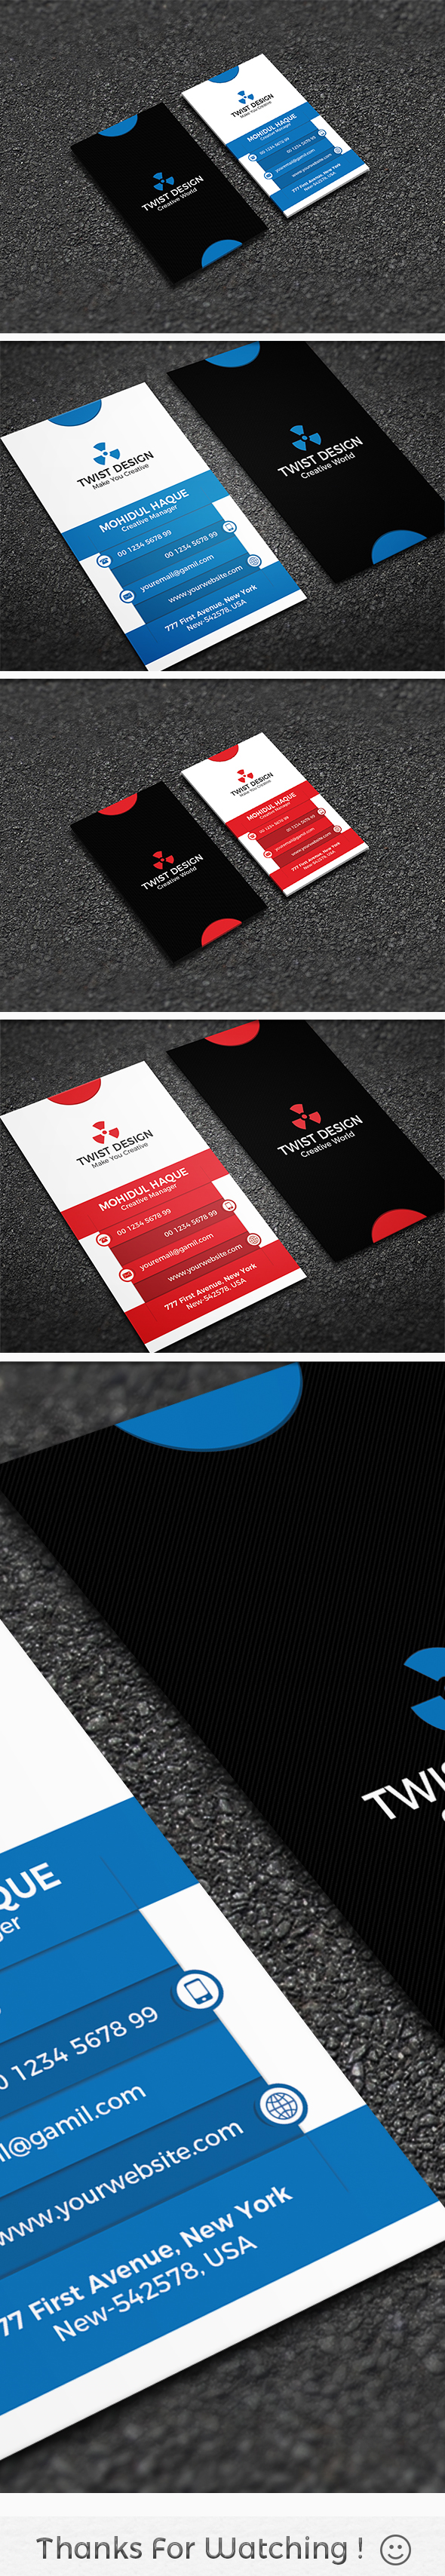 business card clean corporate creative design brand designer branding  vertical visiting card